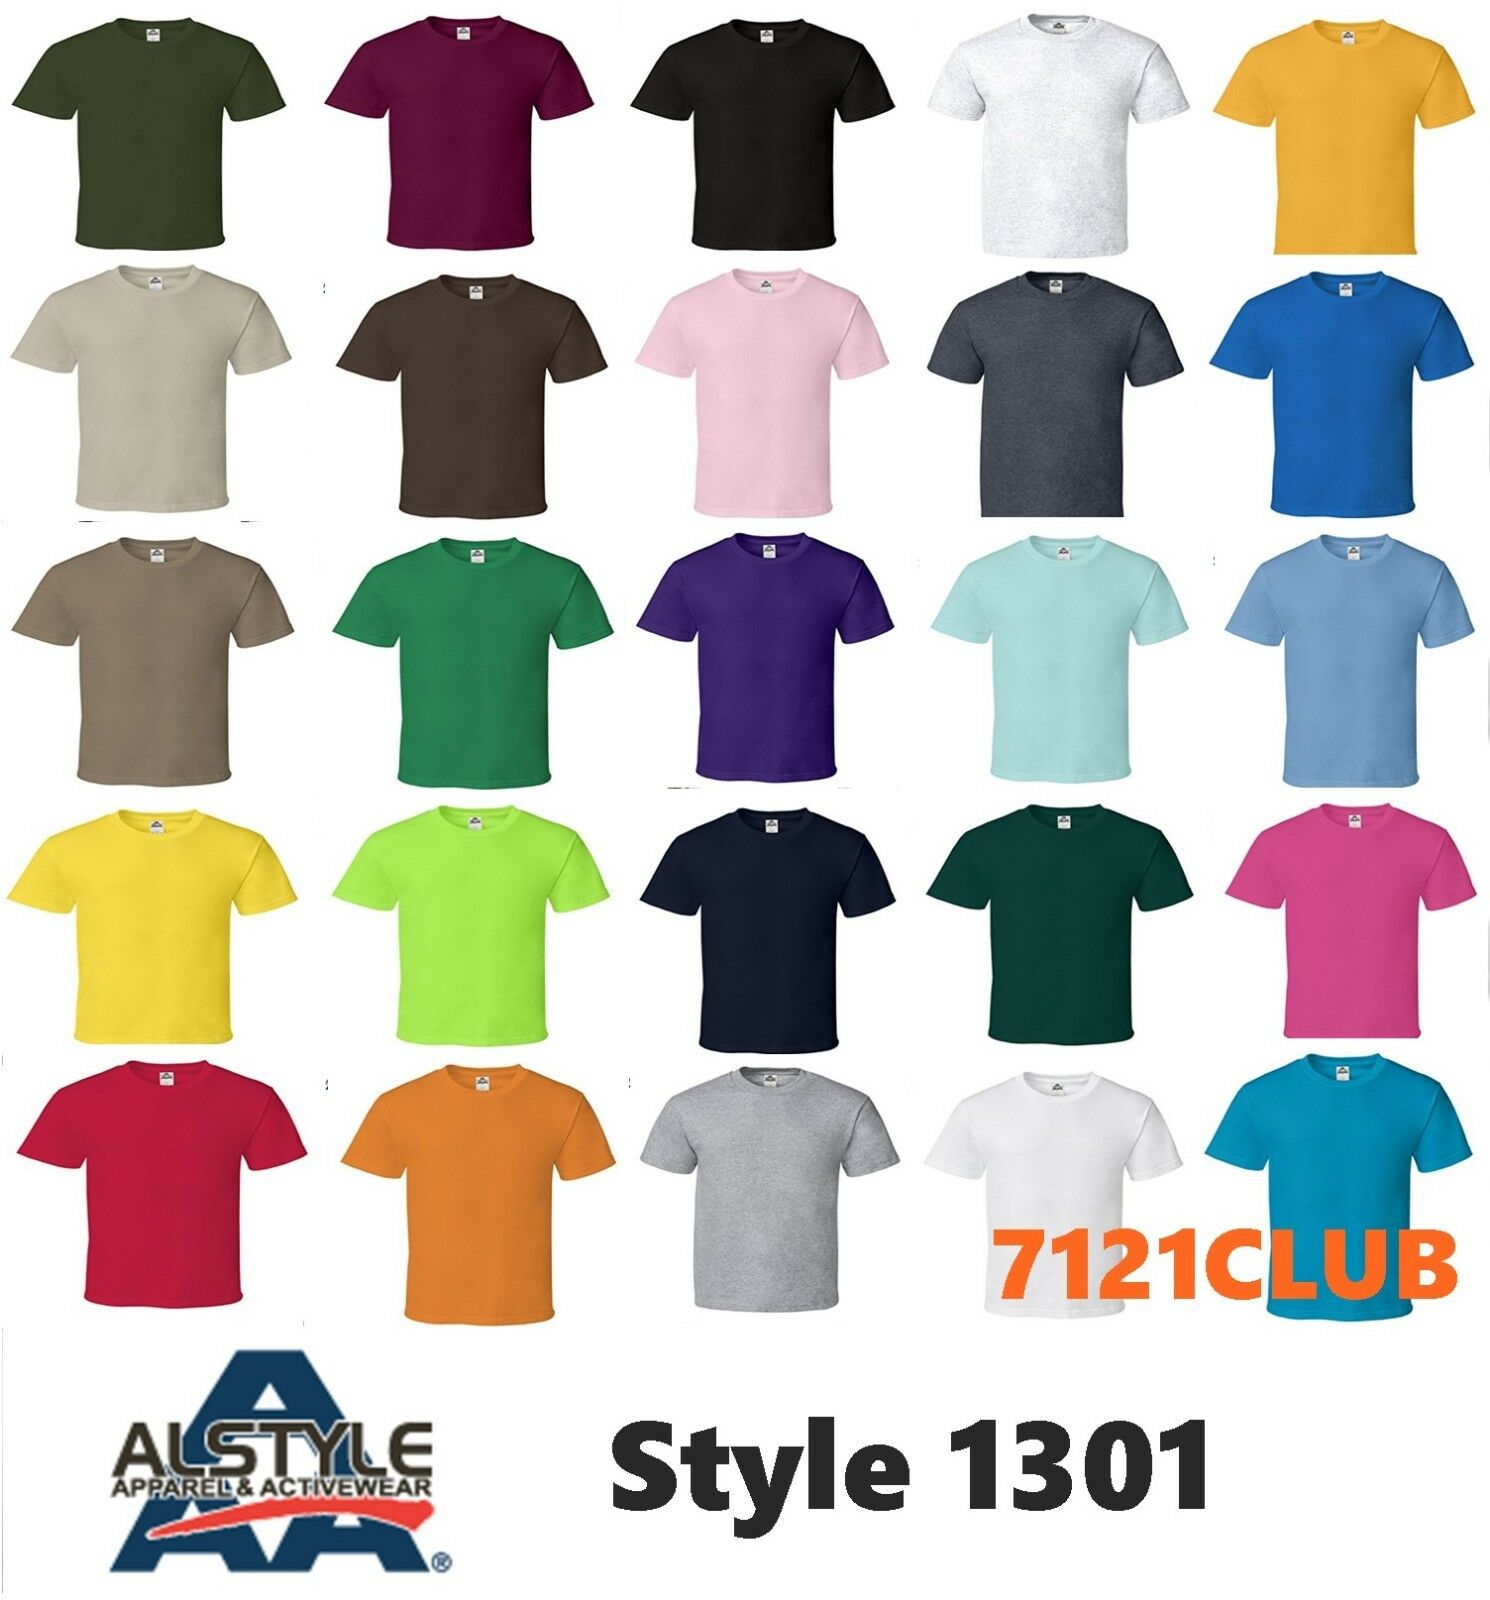 Alstyle Apparel Aaa T Shirt 1301 Men's Plain Blank Short Sleeve T Shirts S-5xl